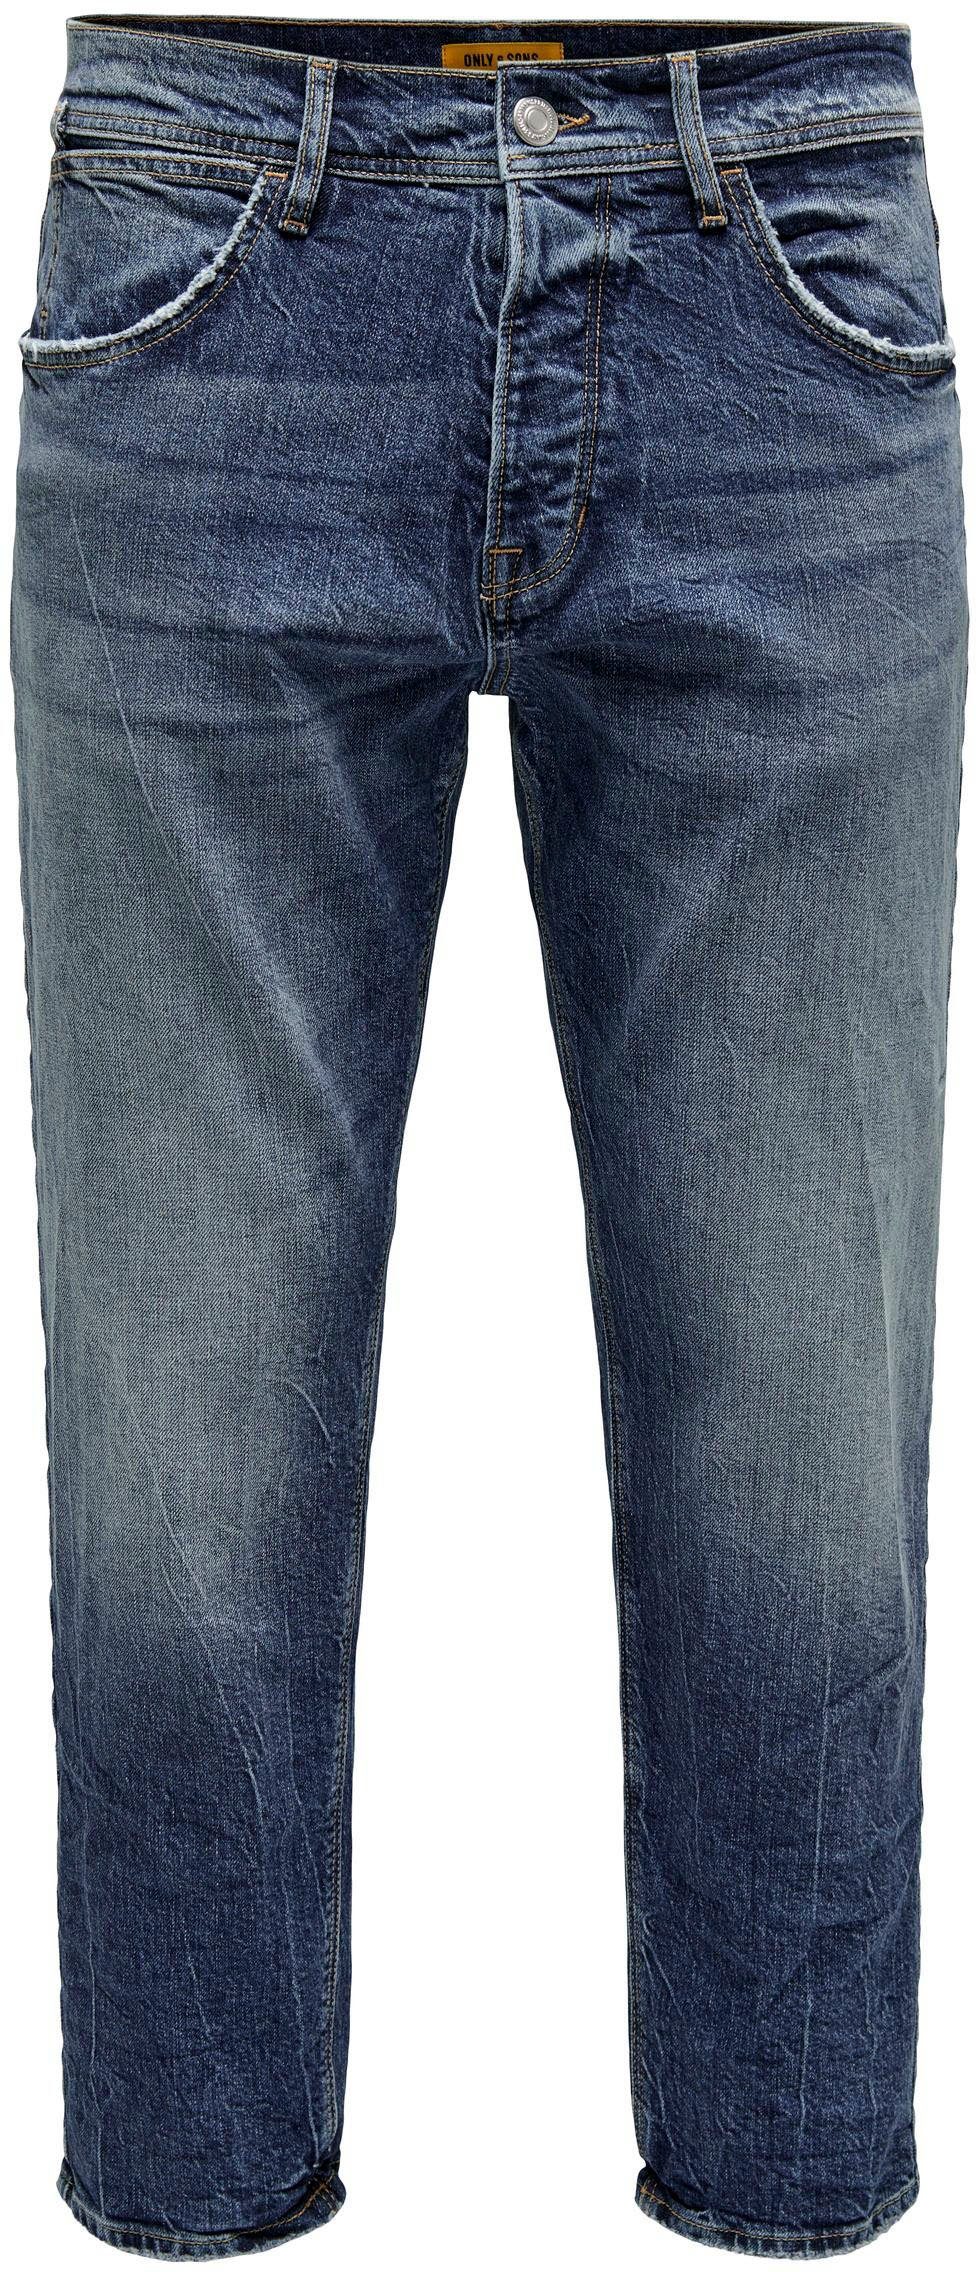 ONLY & SONS 5-Pocket-Jeans ONSAVI COMFORT L. BLUE 4934 JEANS NOOS dark medium blue